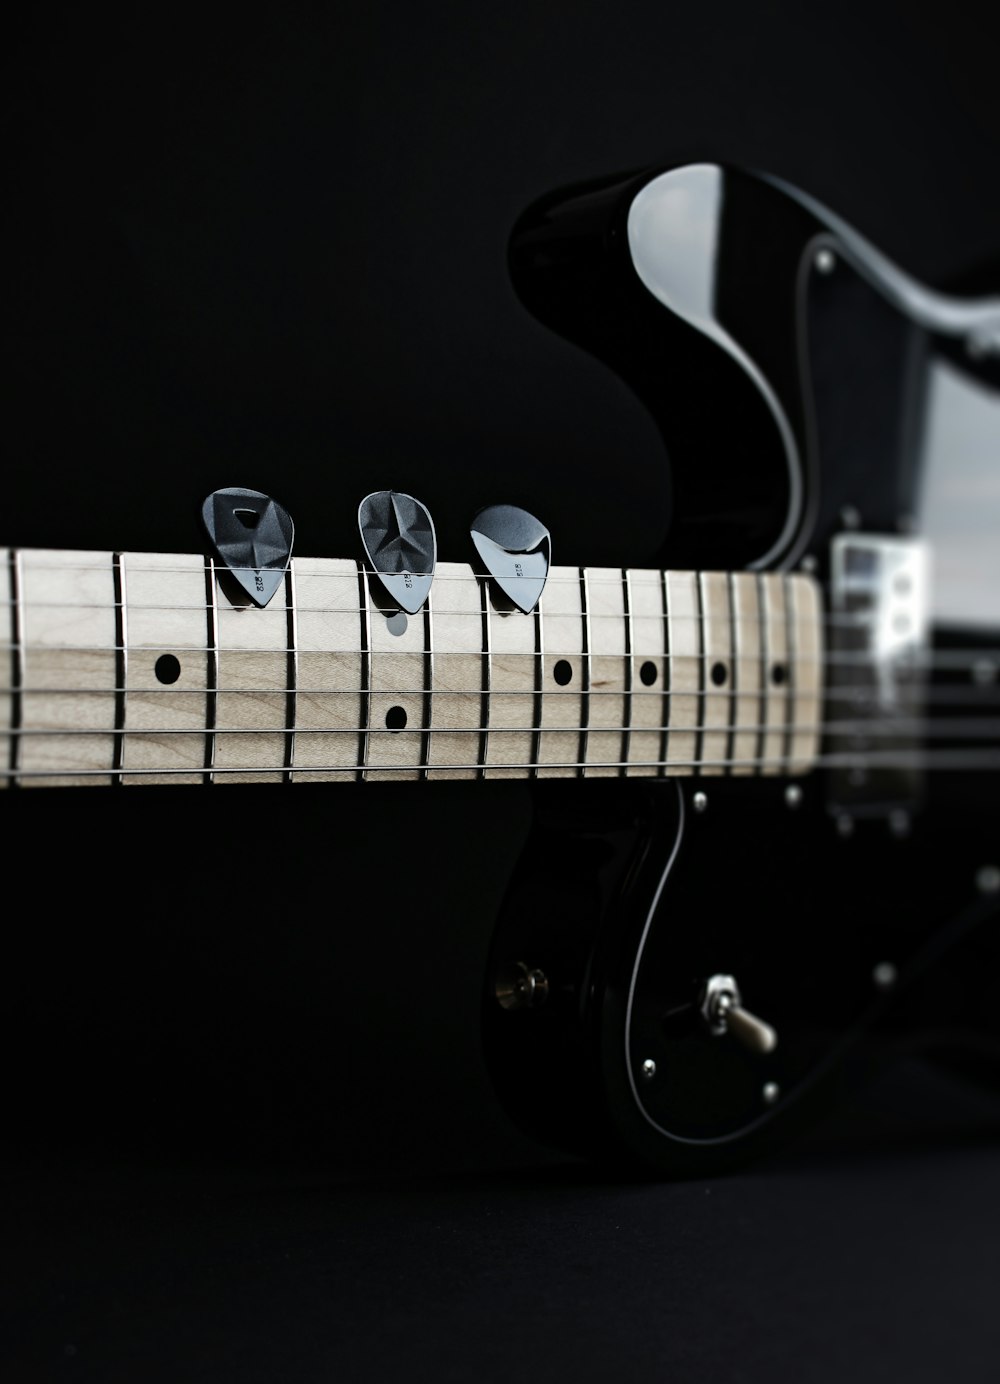 a close up of a black electric guitar